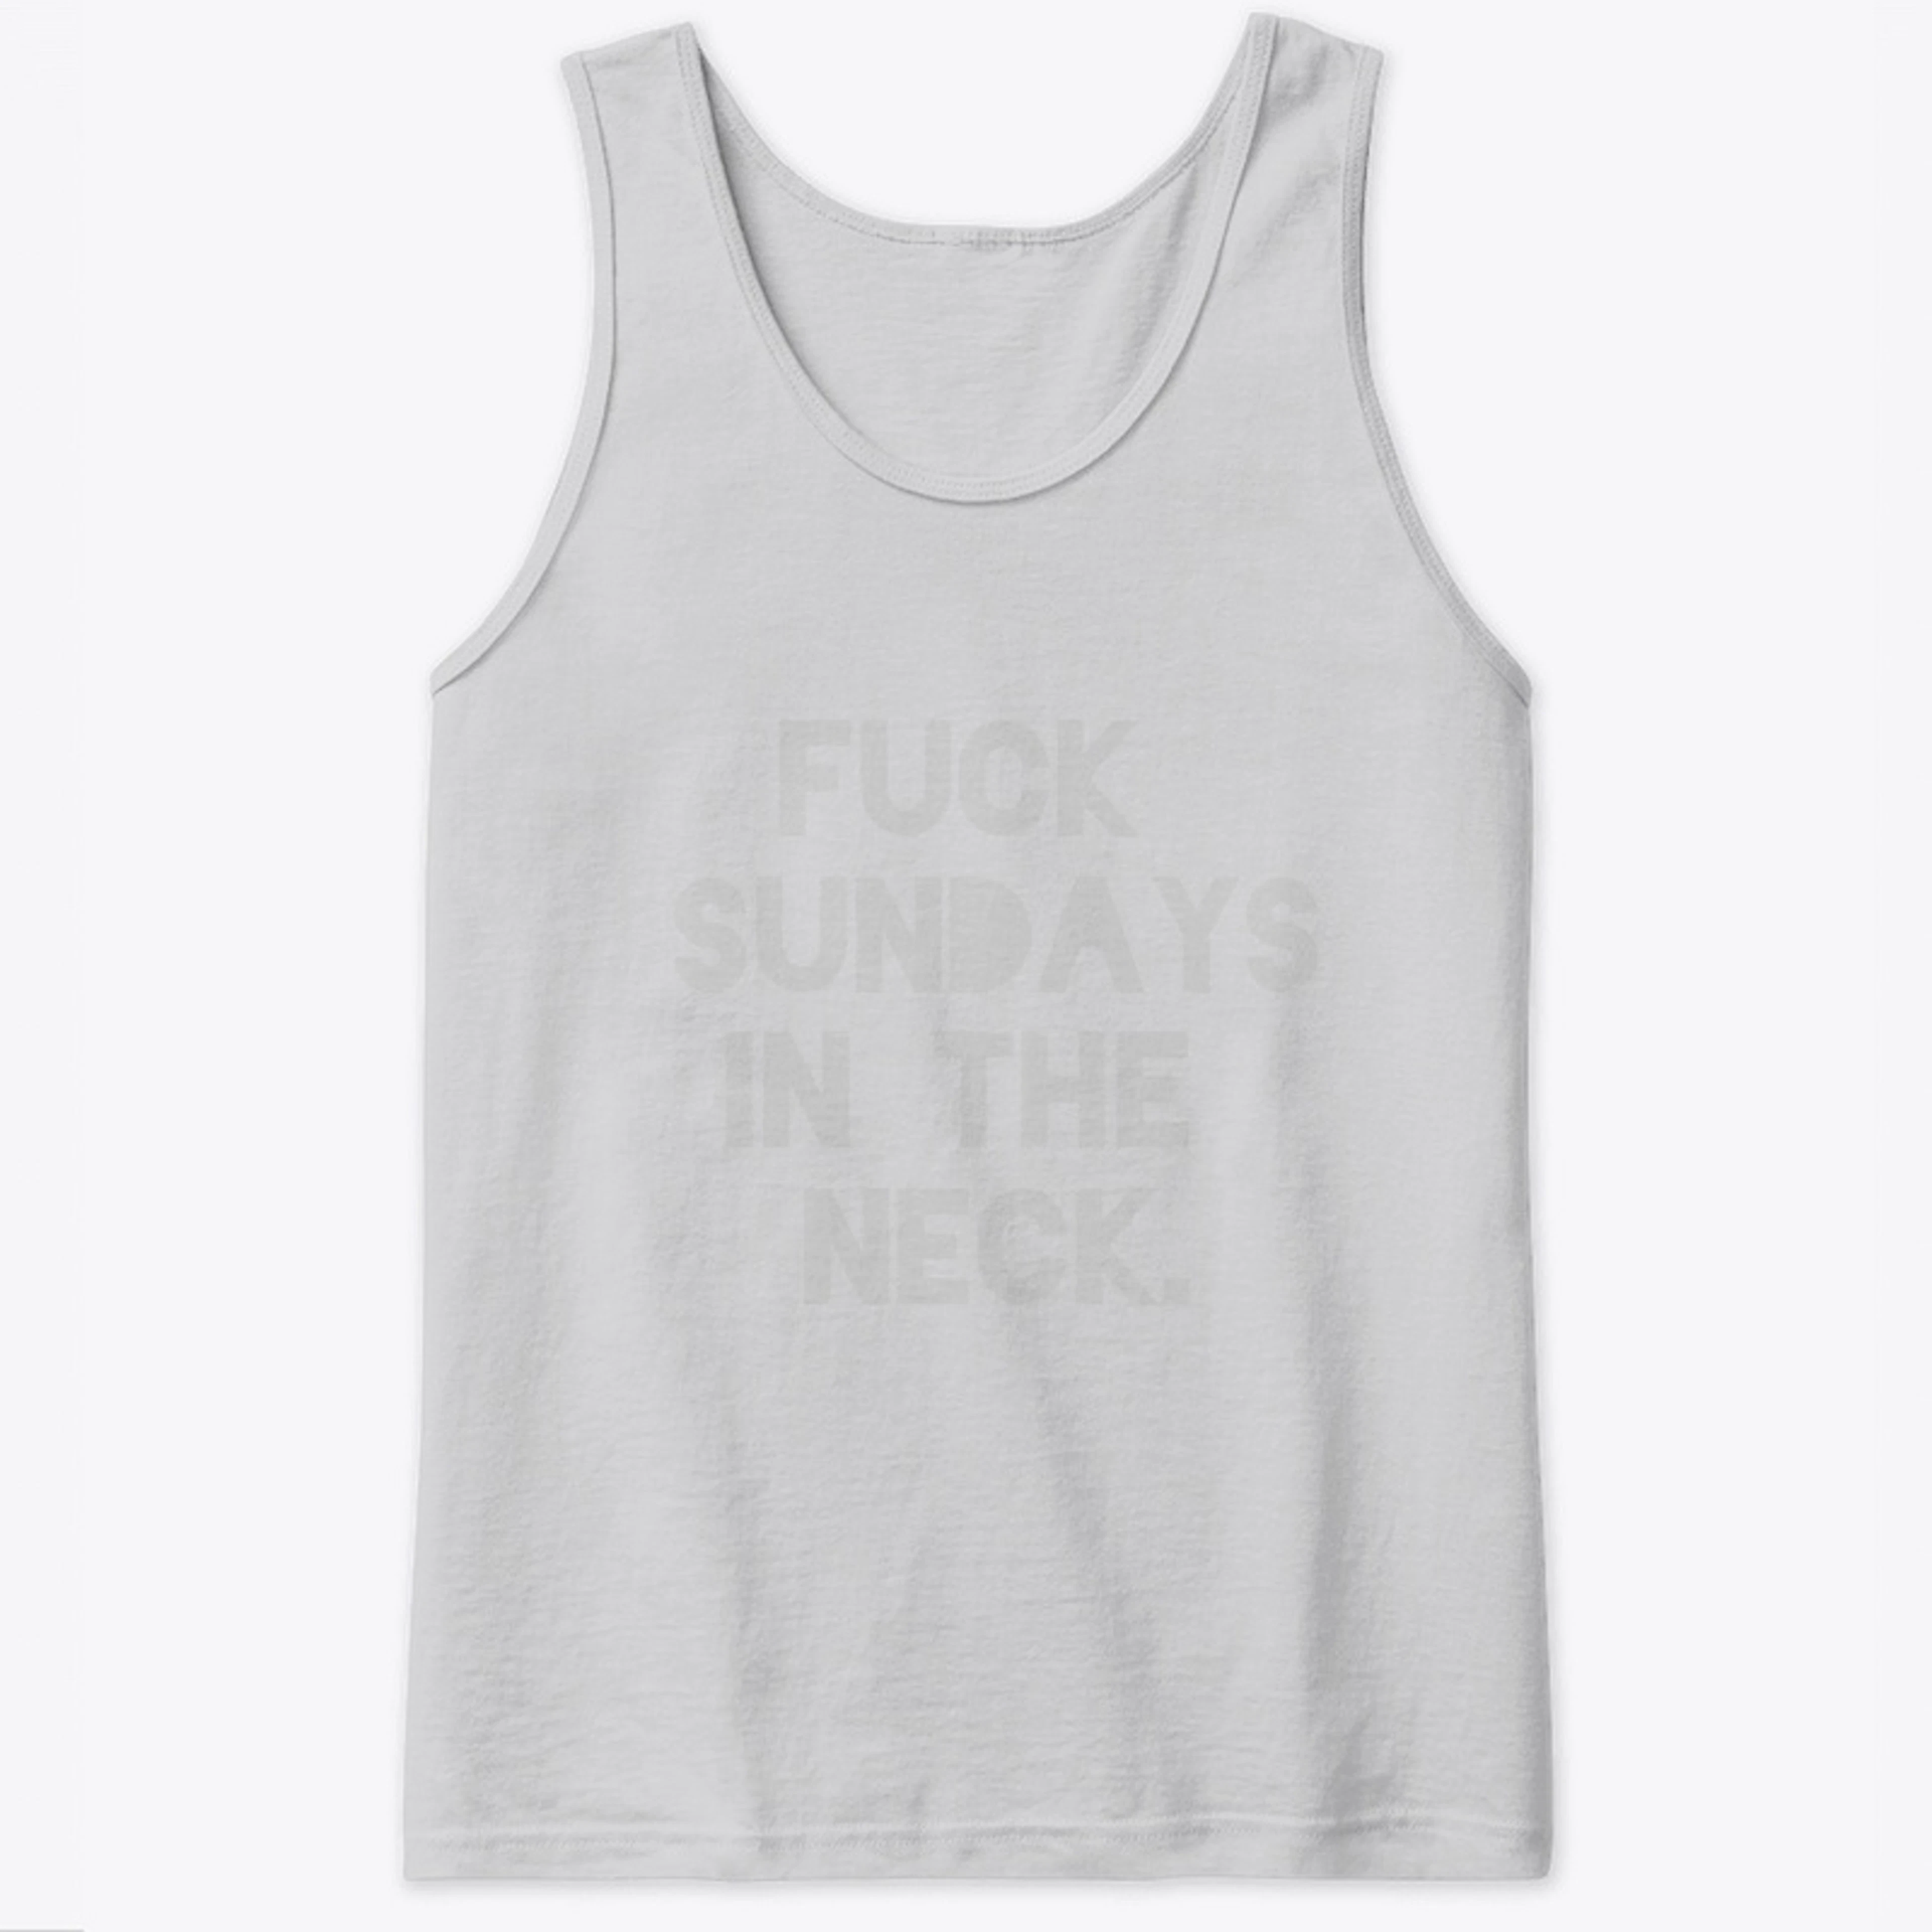 Fuck Sundays in the Neck